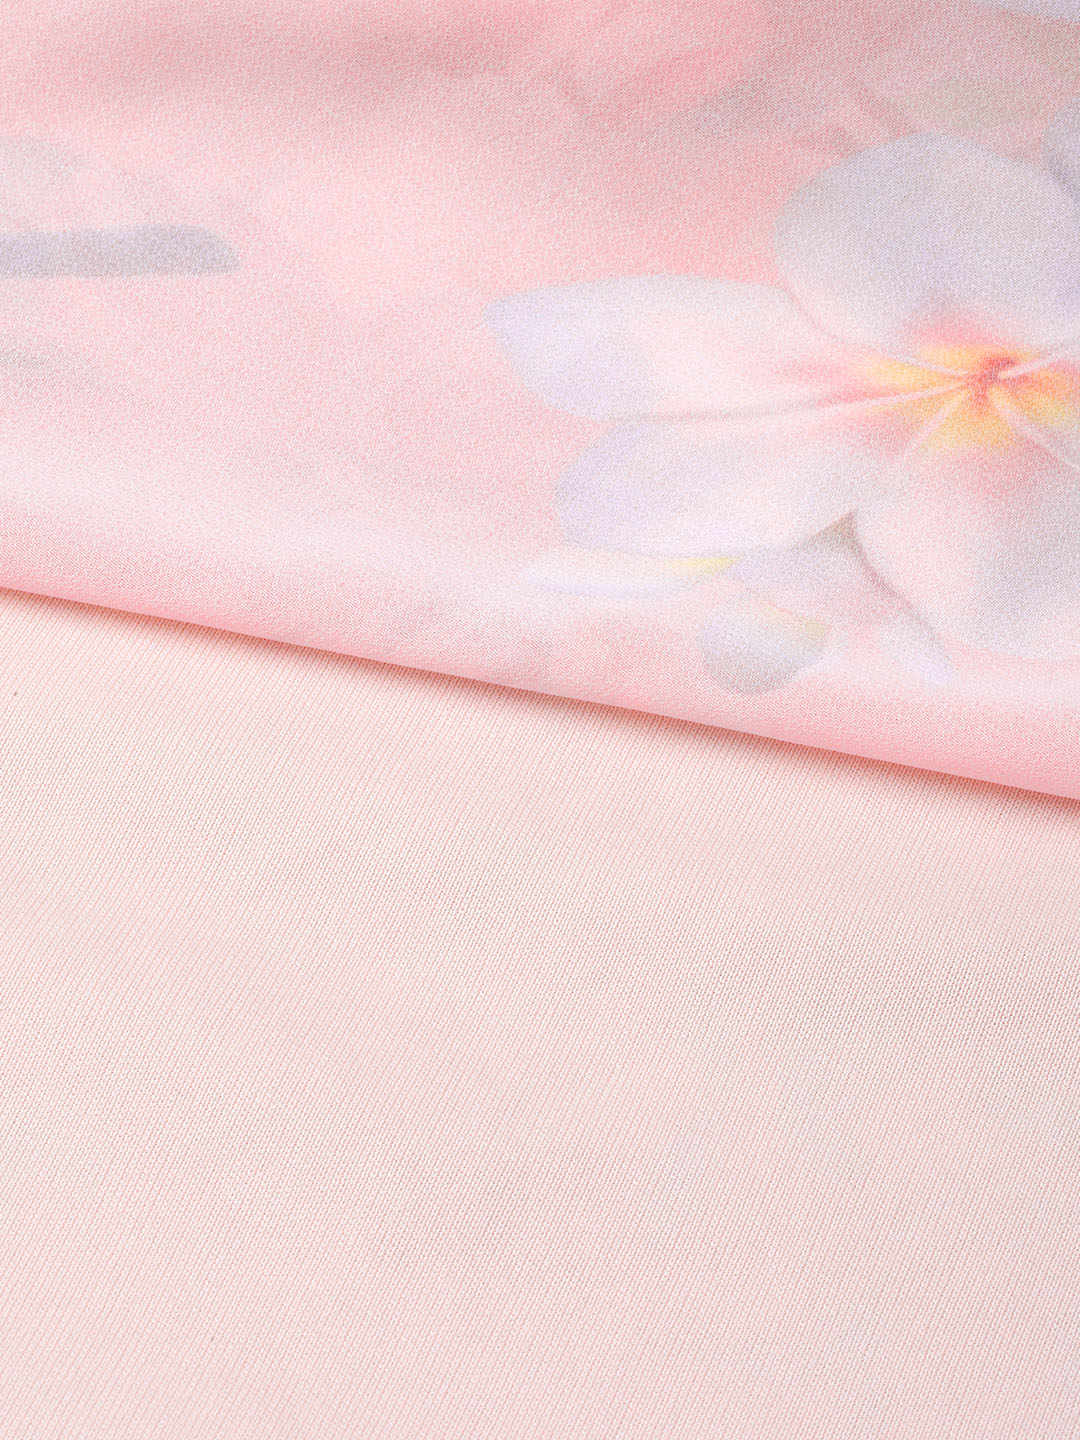 Peach Floral Off Shoulder Midi Dress